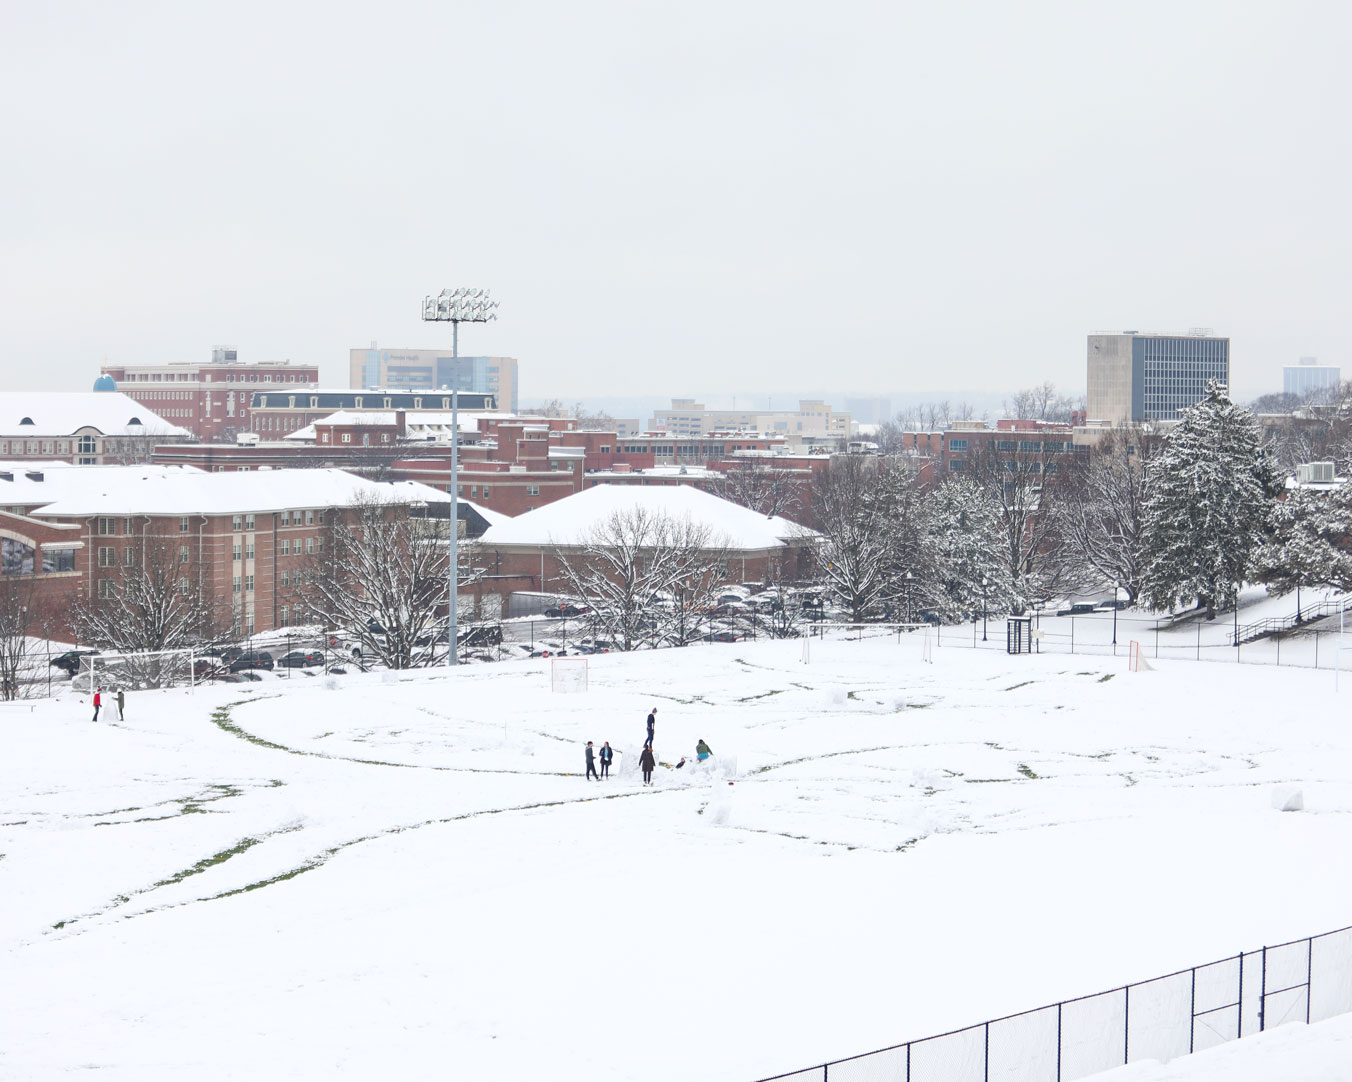 Students build a snowman on Stuart Field